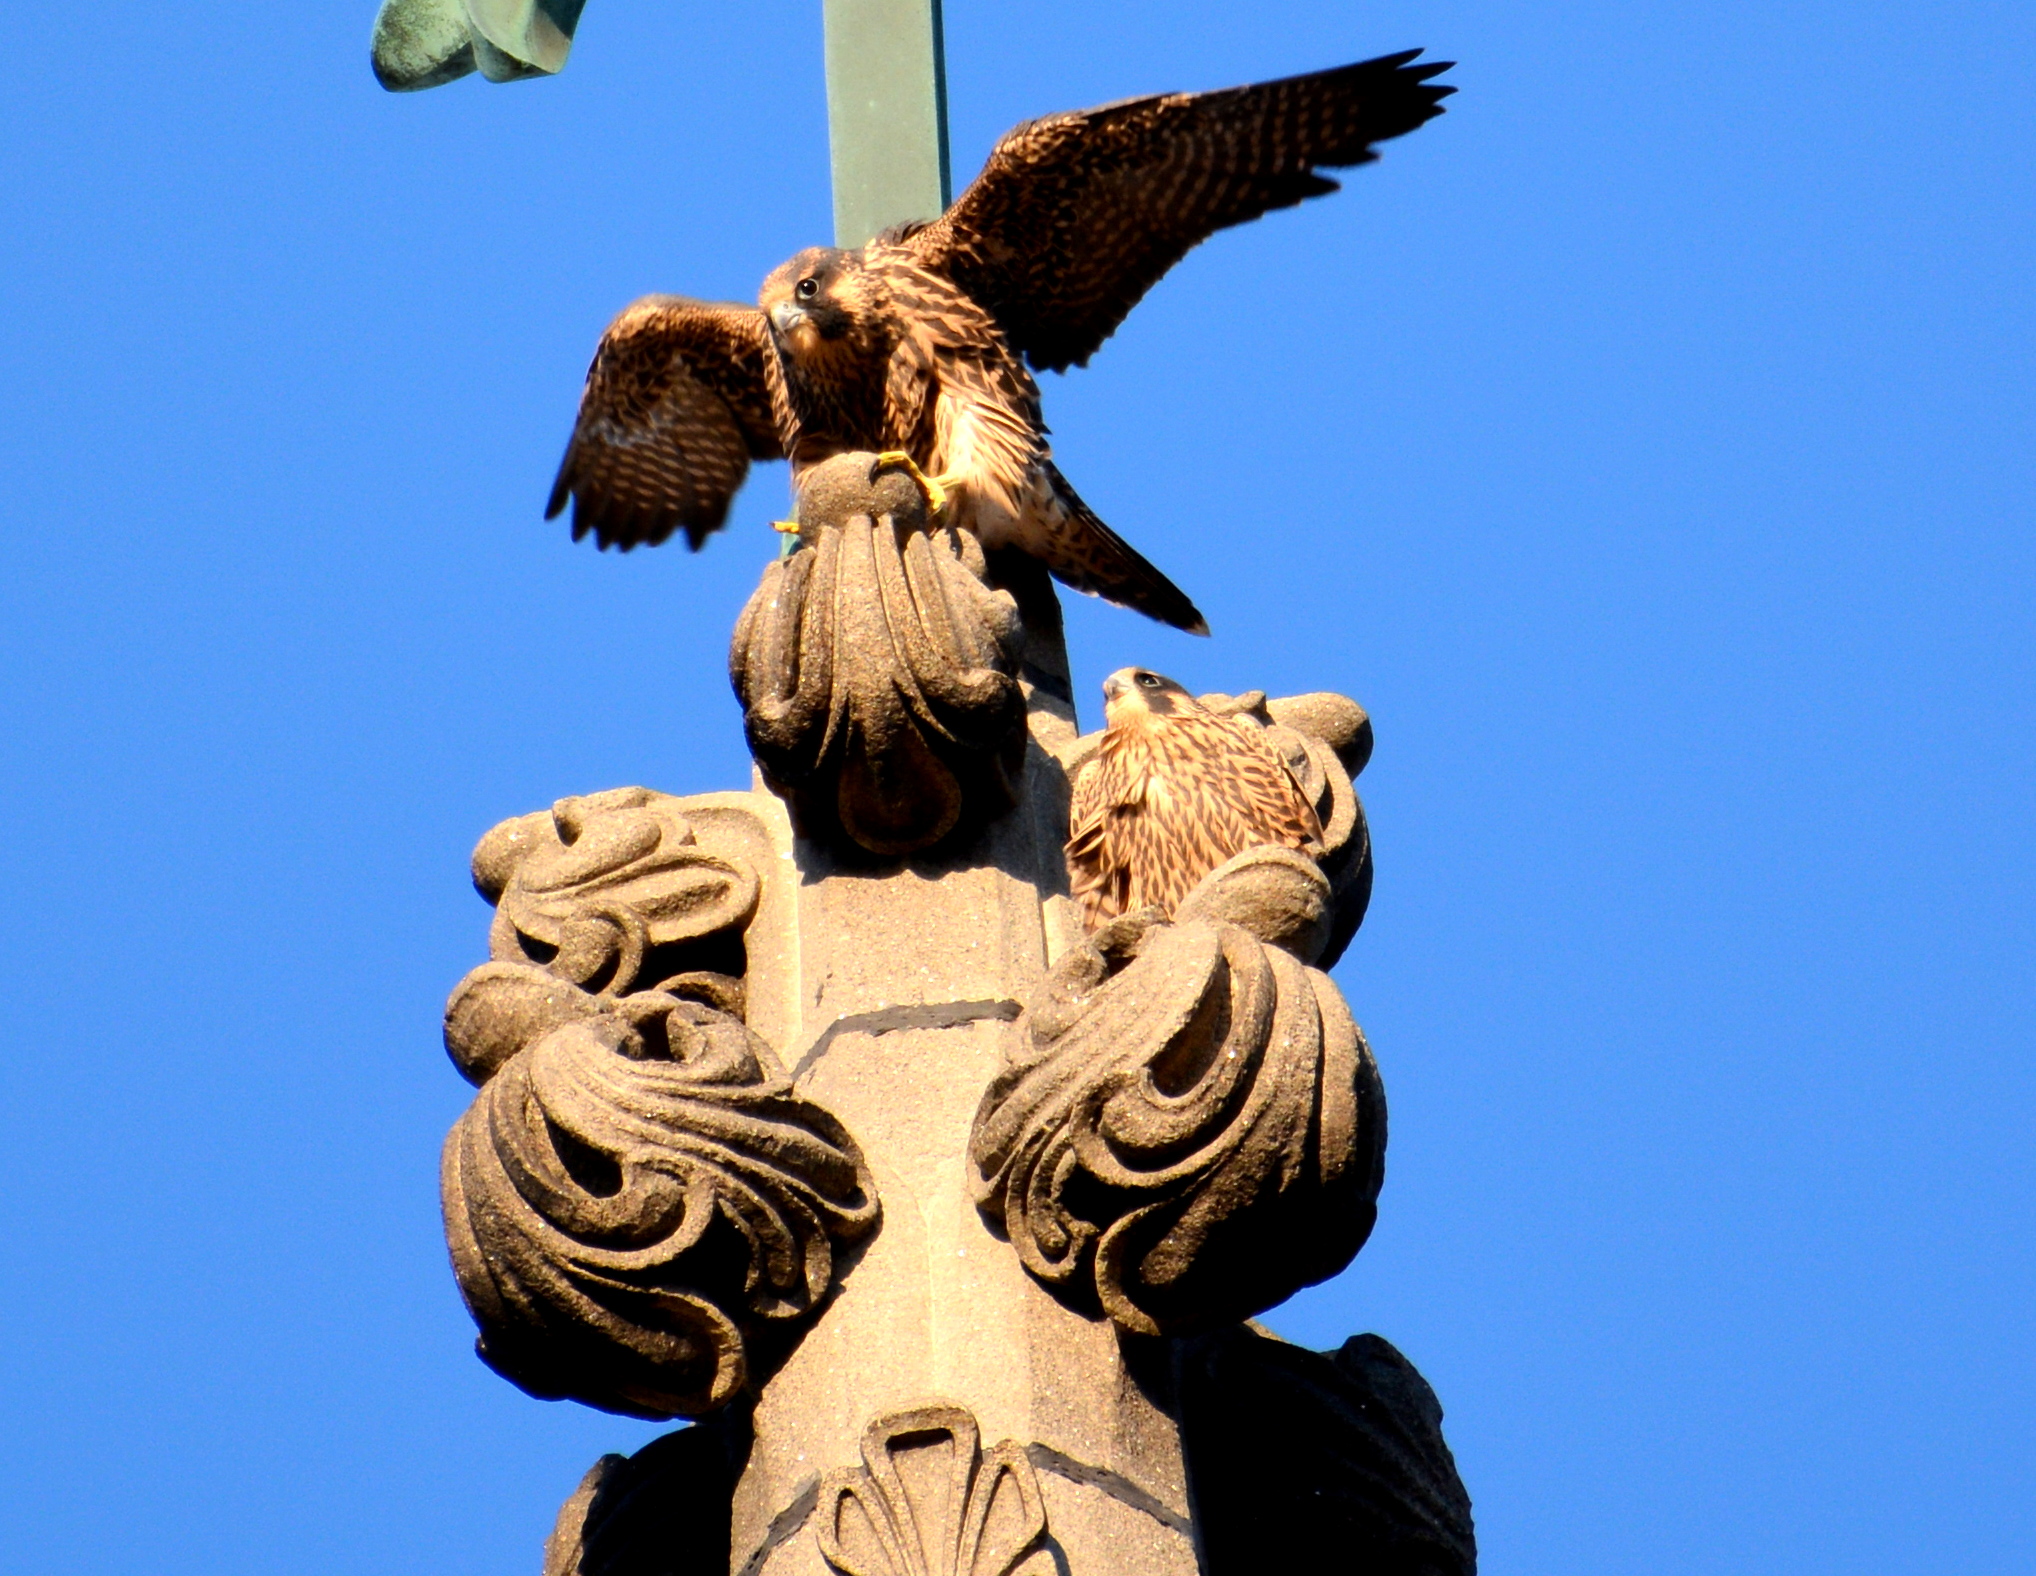 Falcons make great living Gargoyles - perfect for any building facade  